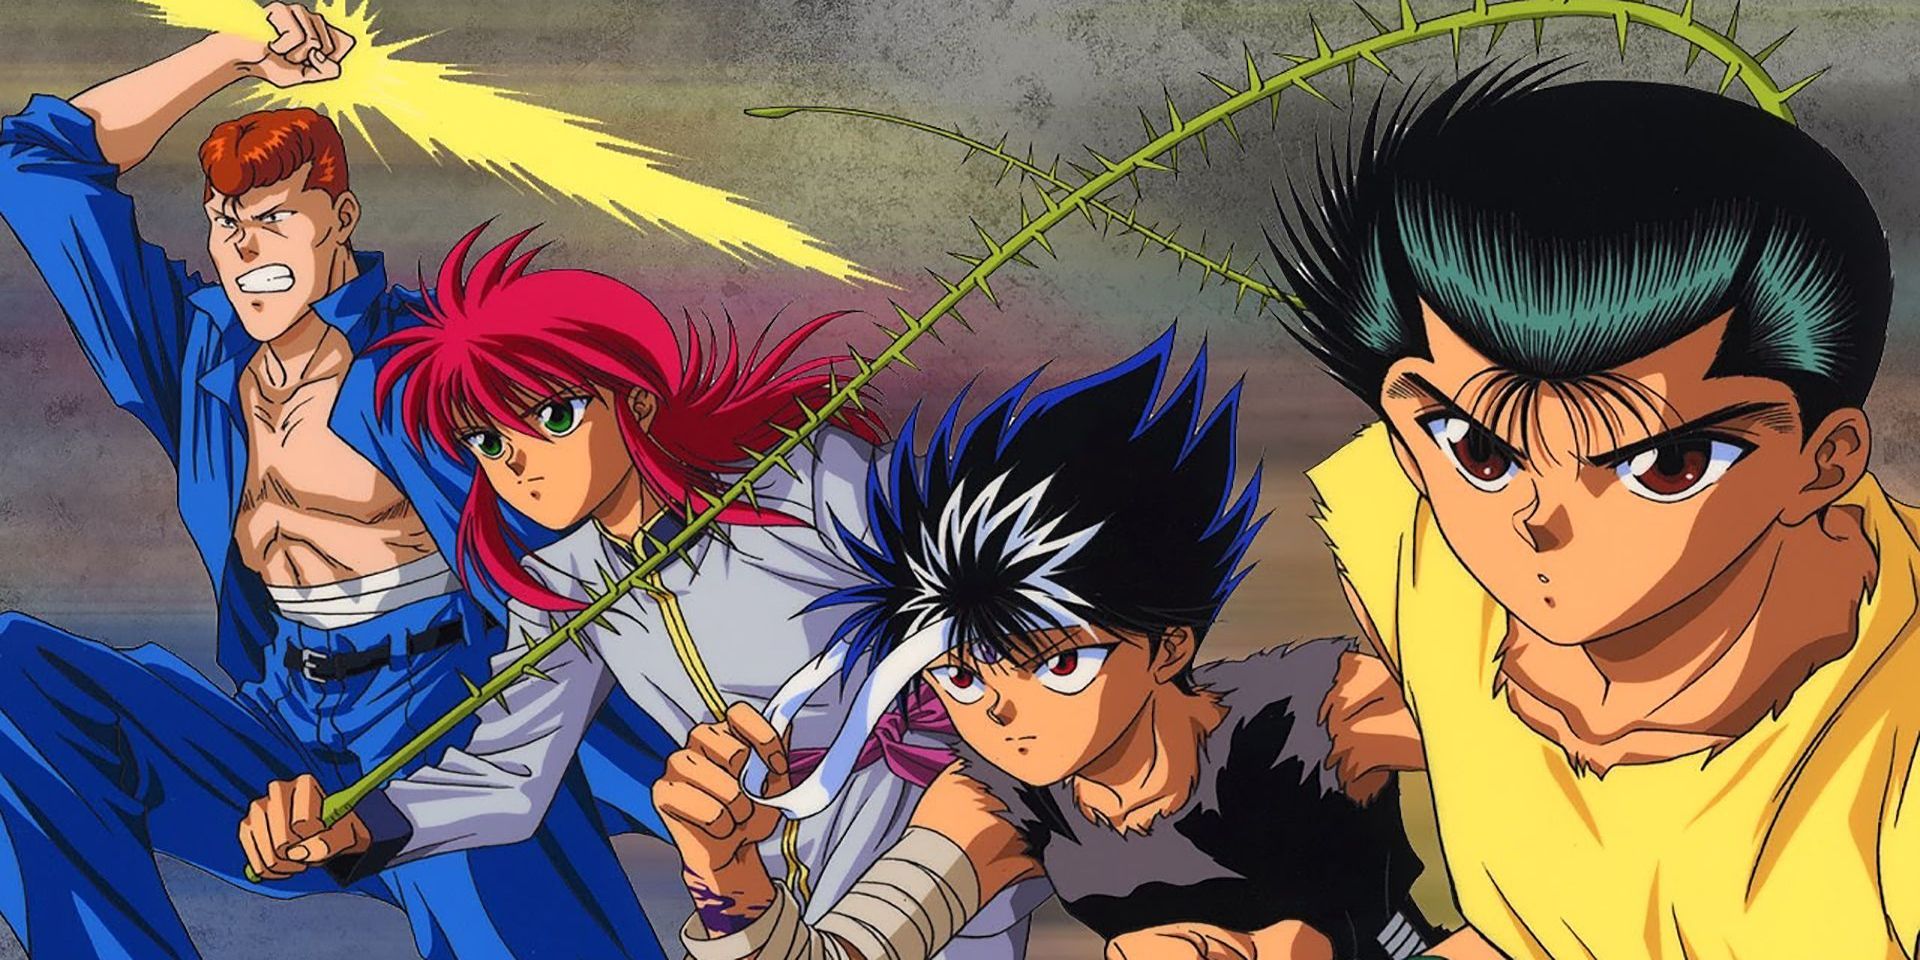 Characters from the 1992 anime series Yu Yu Hakusho.